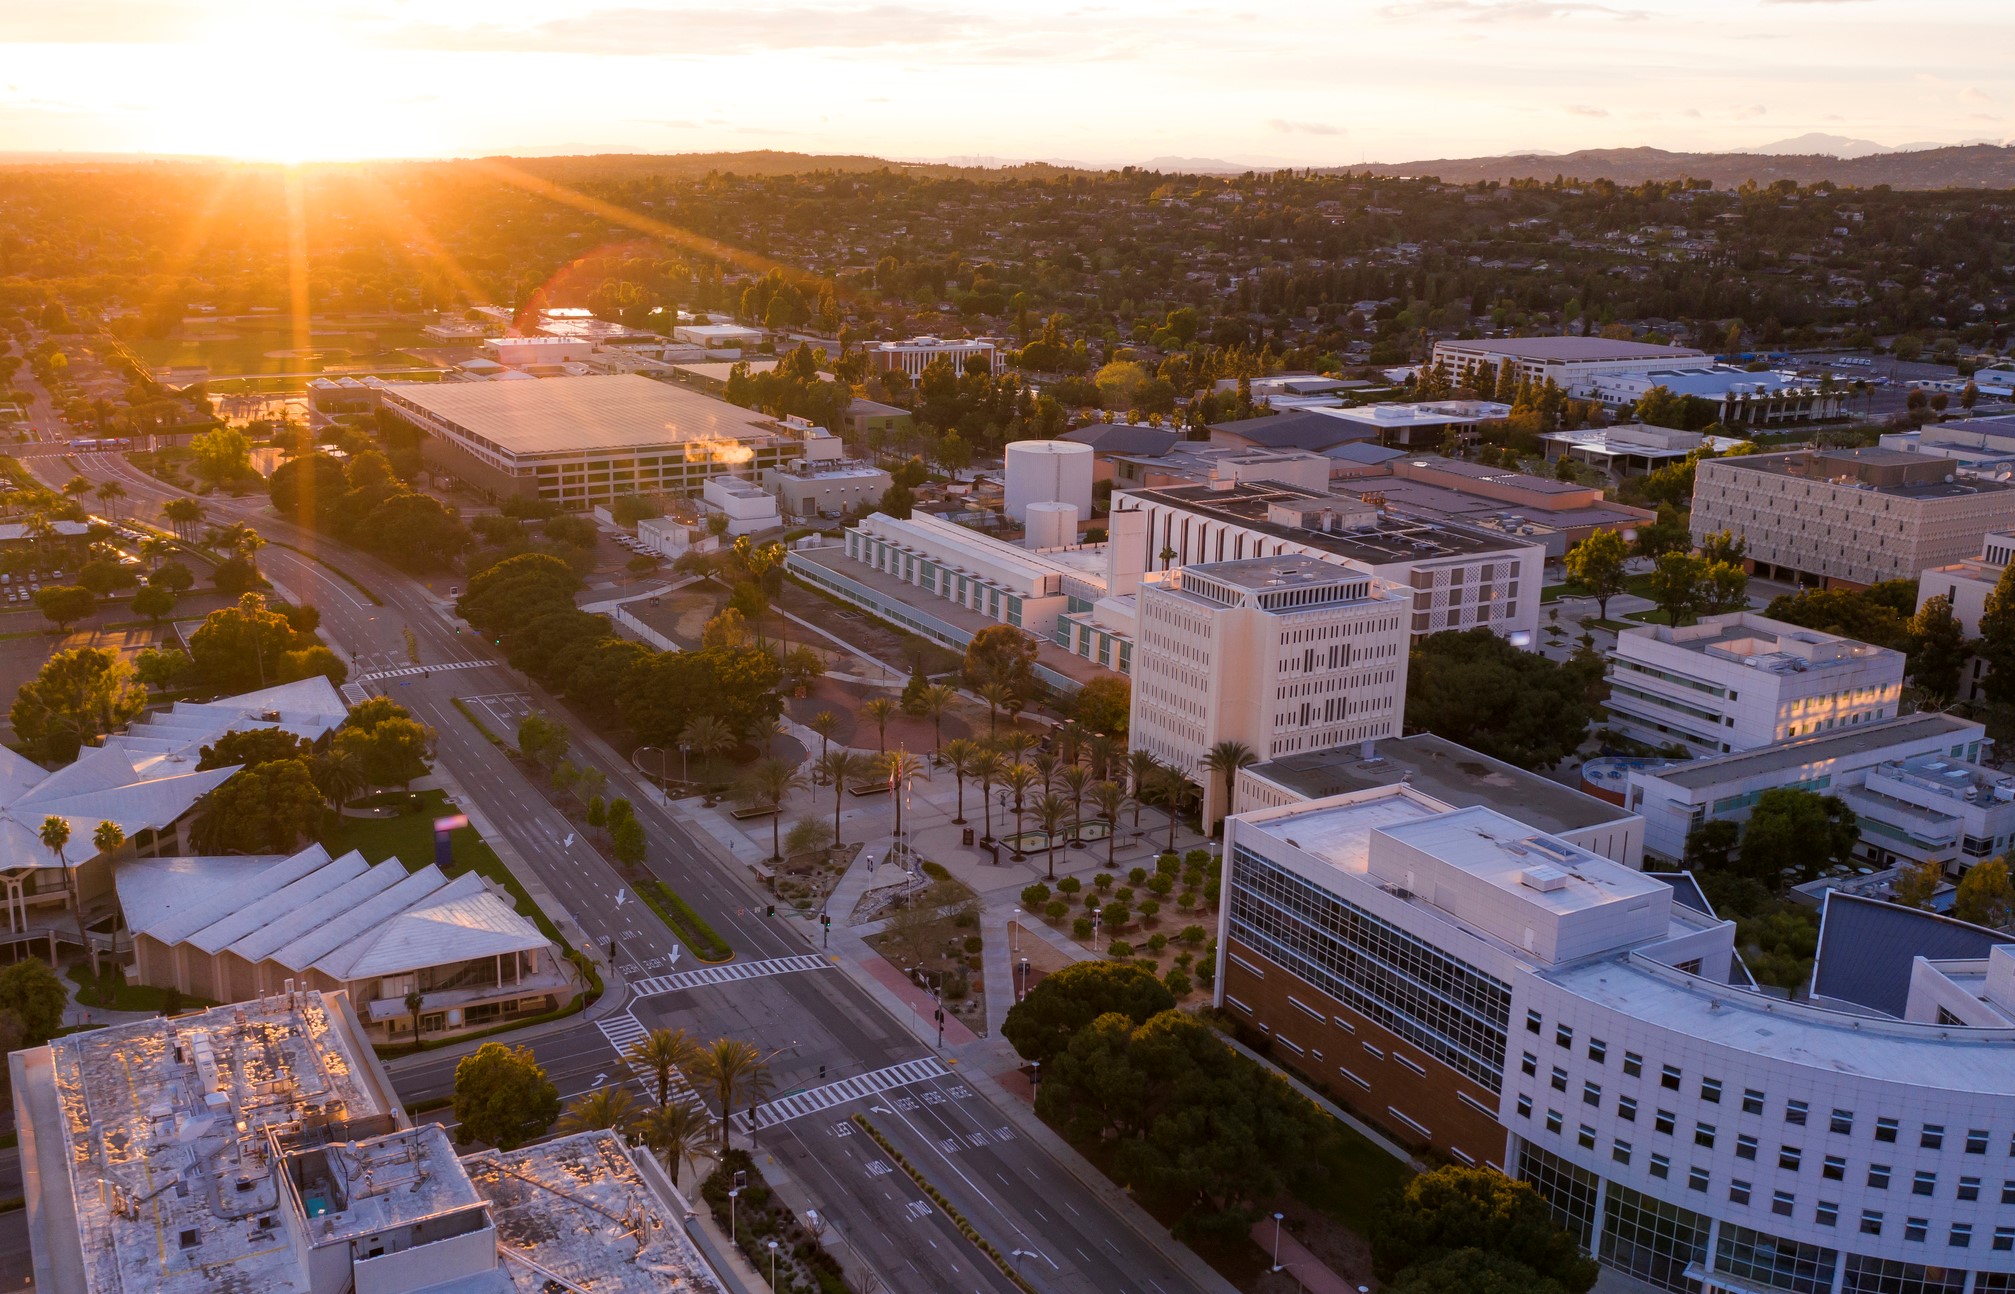 Cal State Fullerton No. 1 in studentbased university rankings